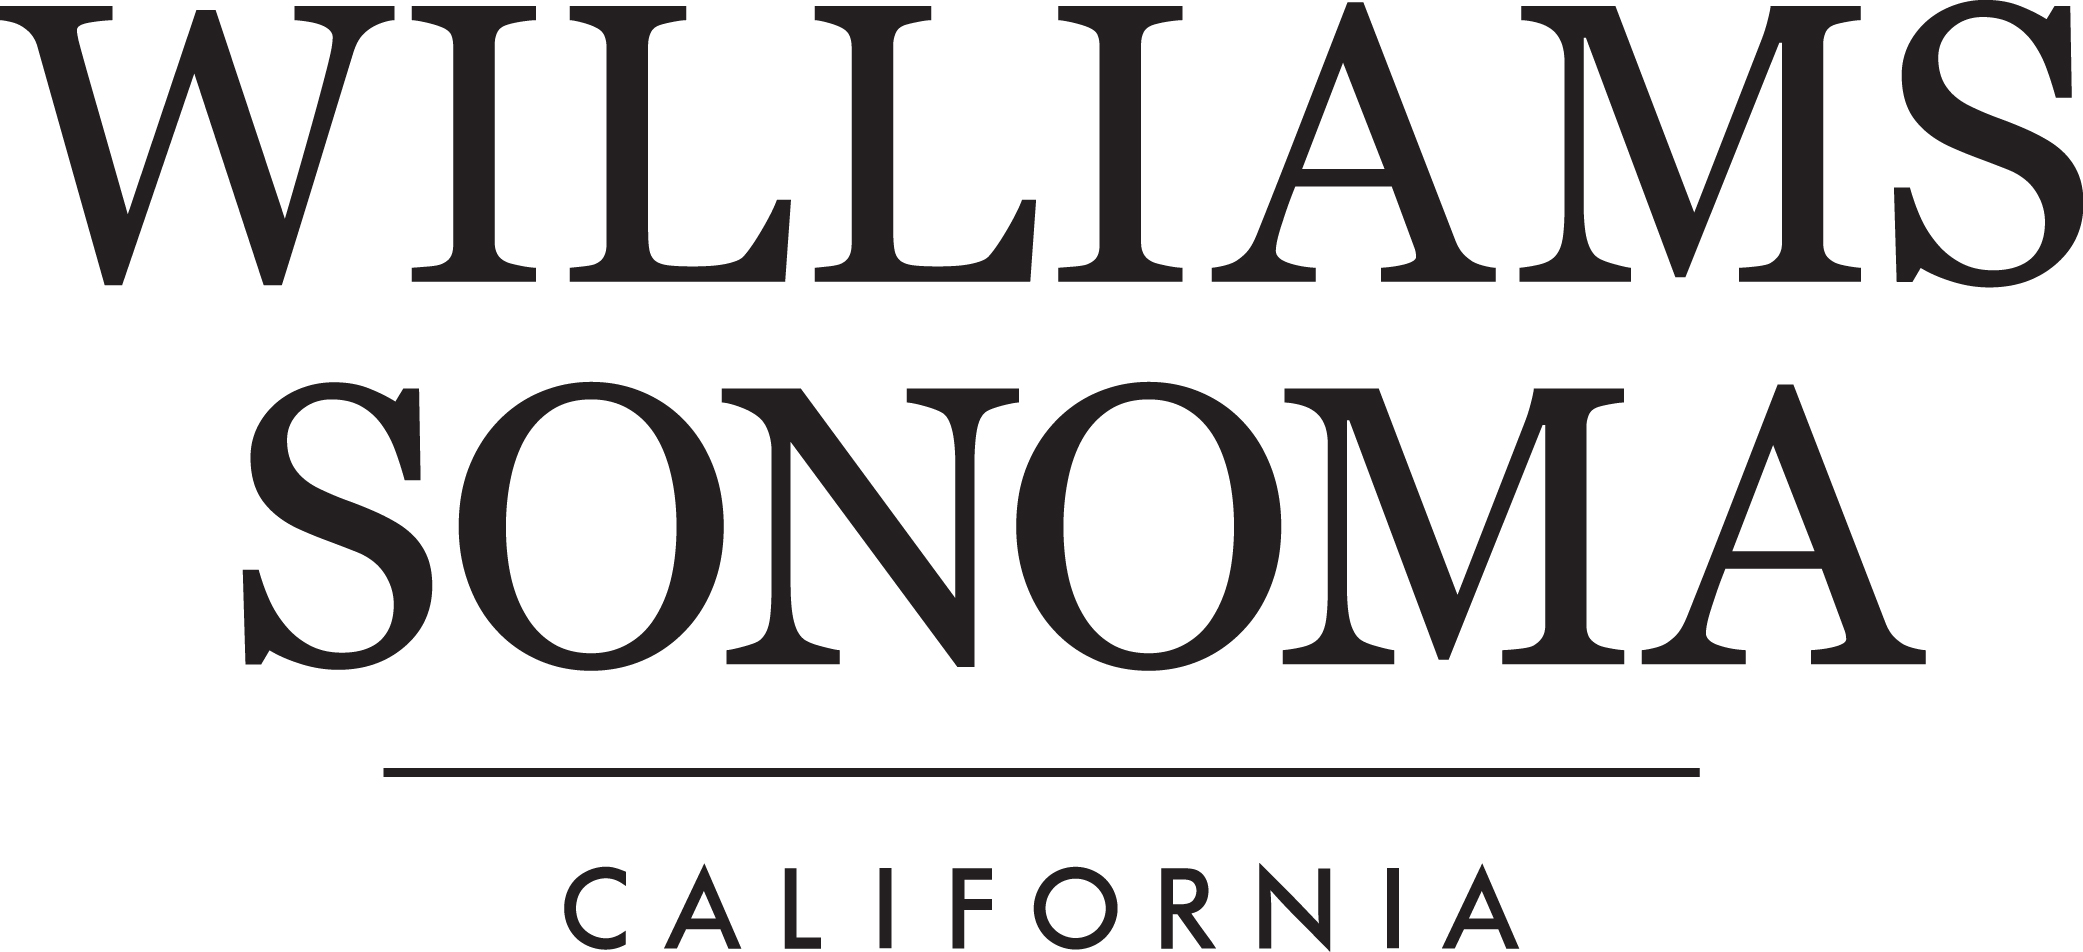 WSI Cal logo